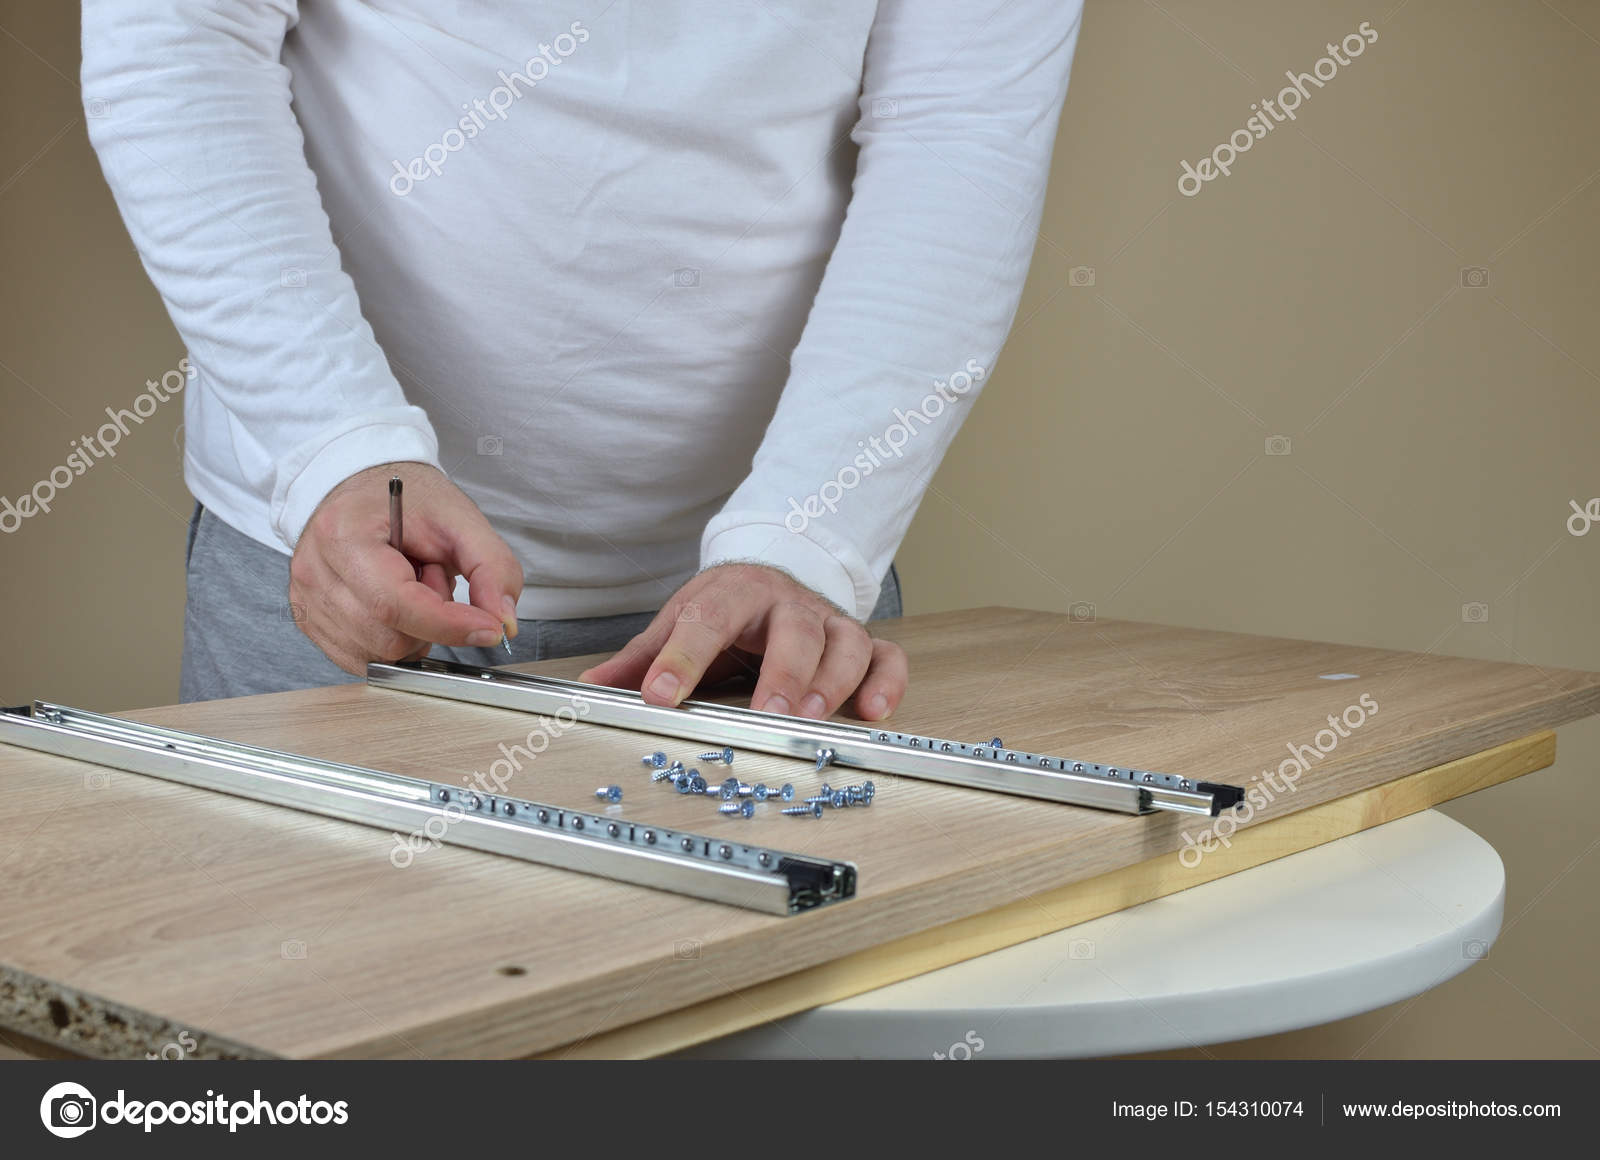 Installing Drawer Slides On A Cabinet Stock Photo C Bane M